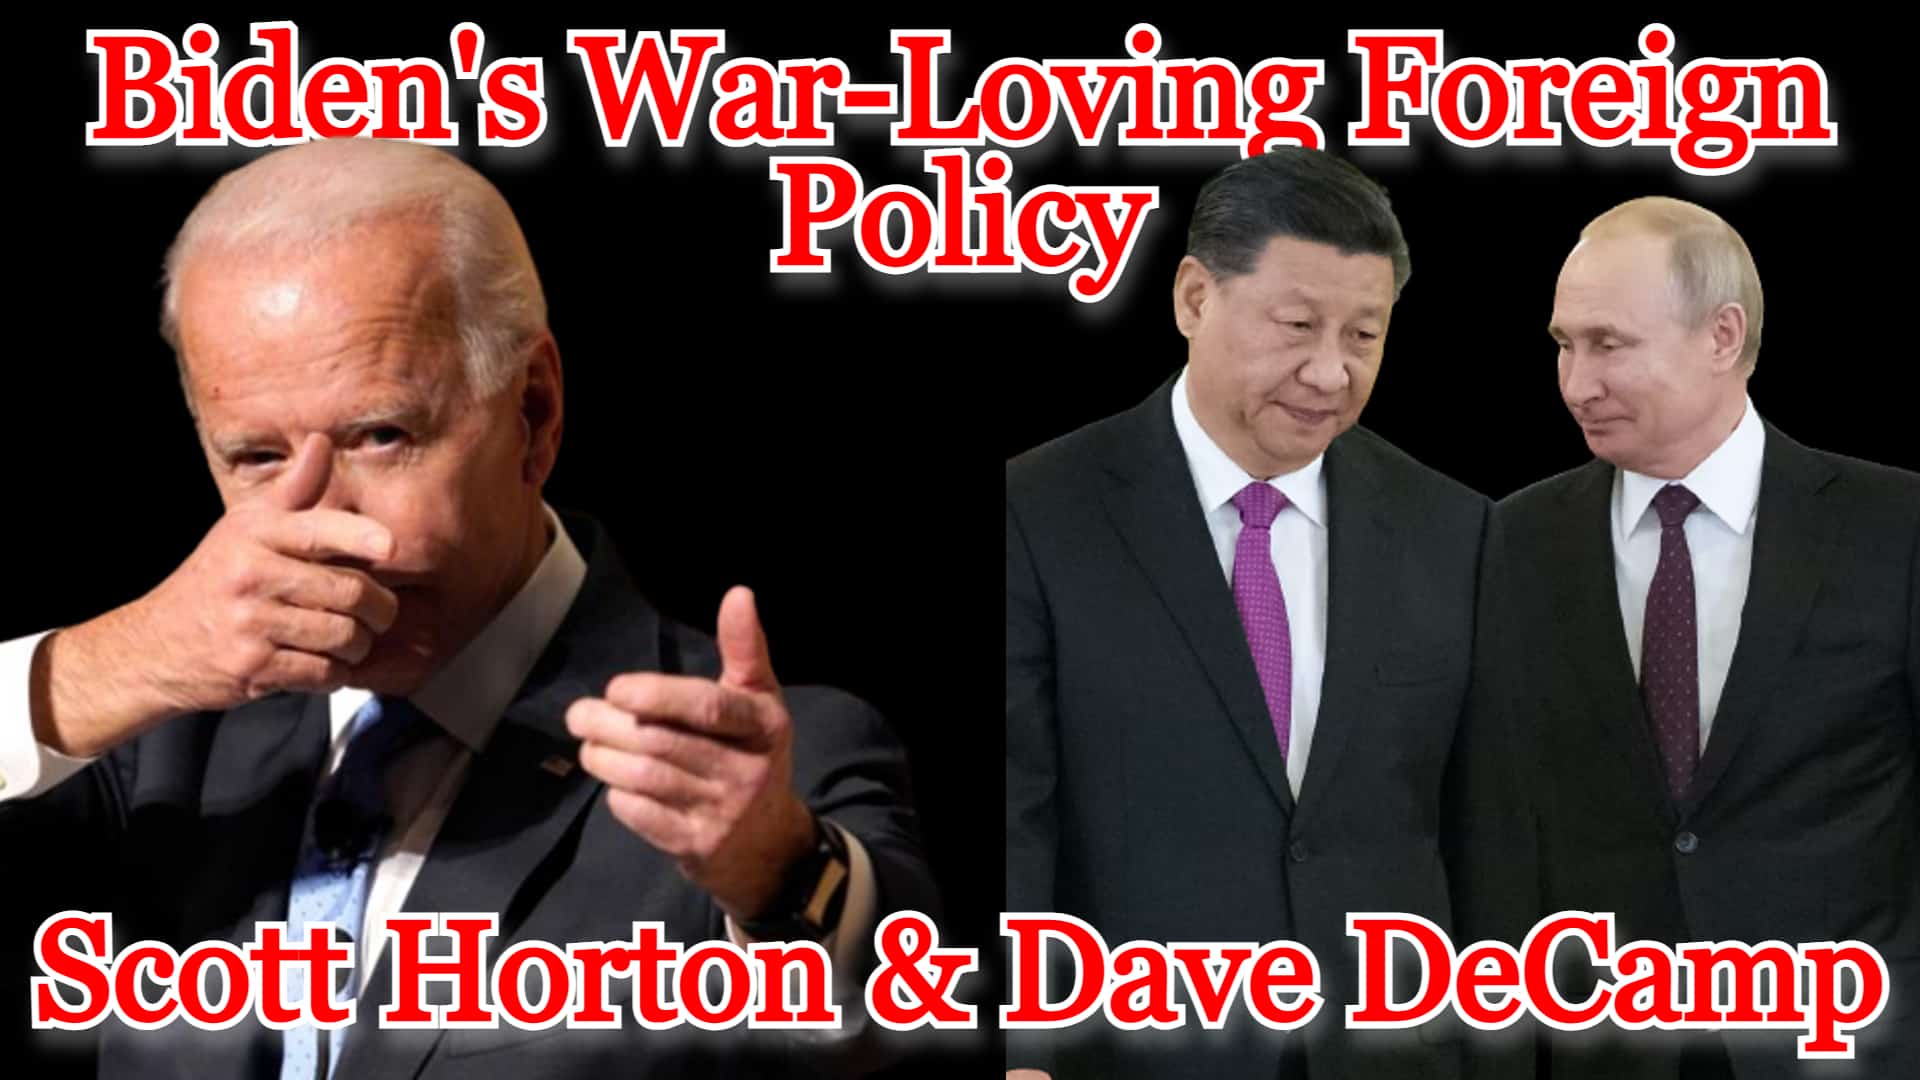 COI #300: Scott Horton & Dave DeCamp on Biden’s War-Loving Foreign Policy